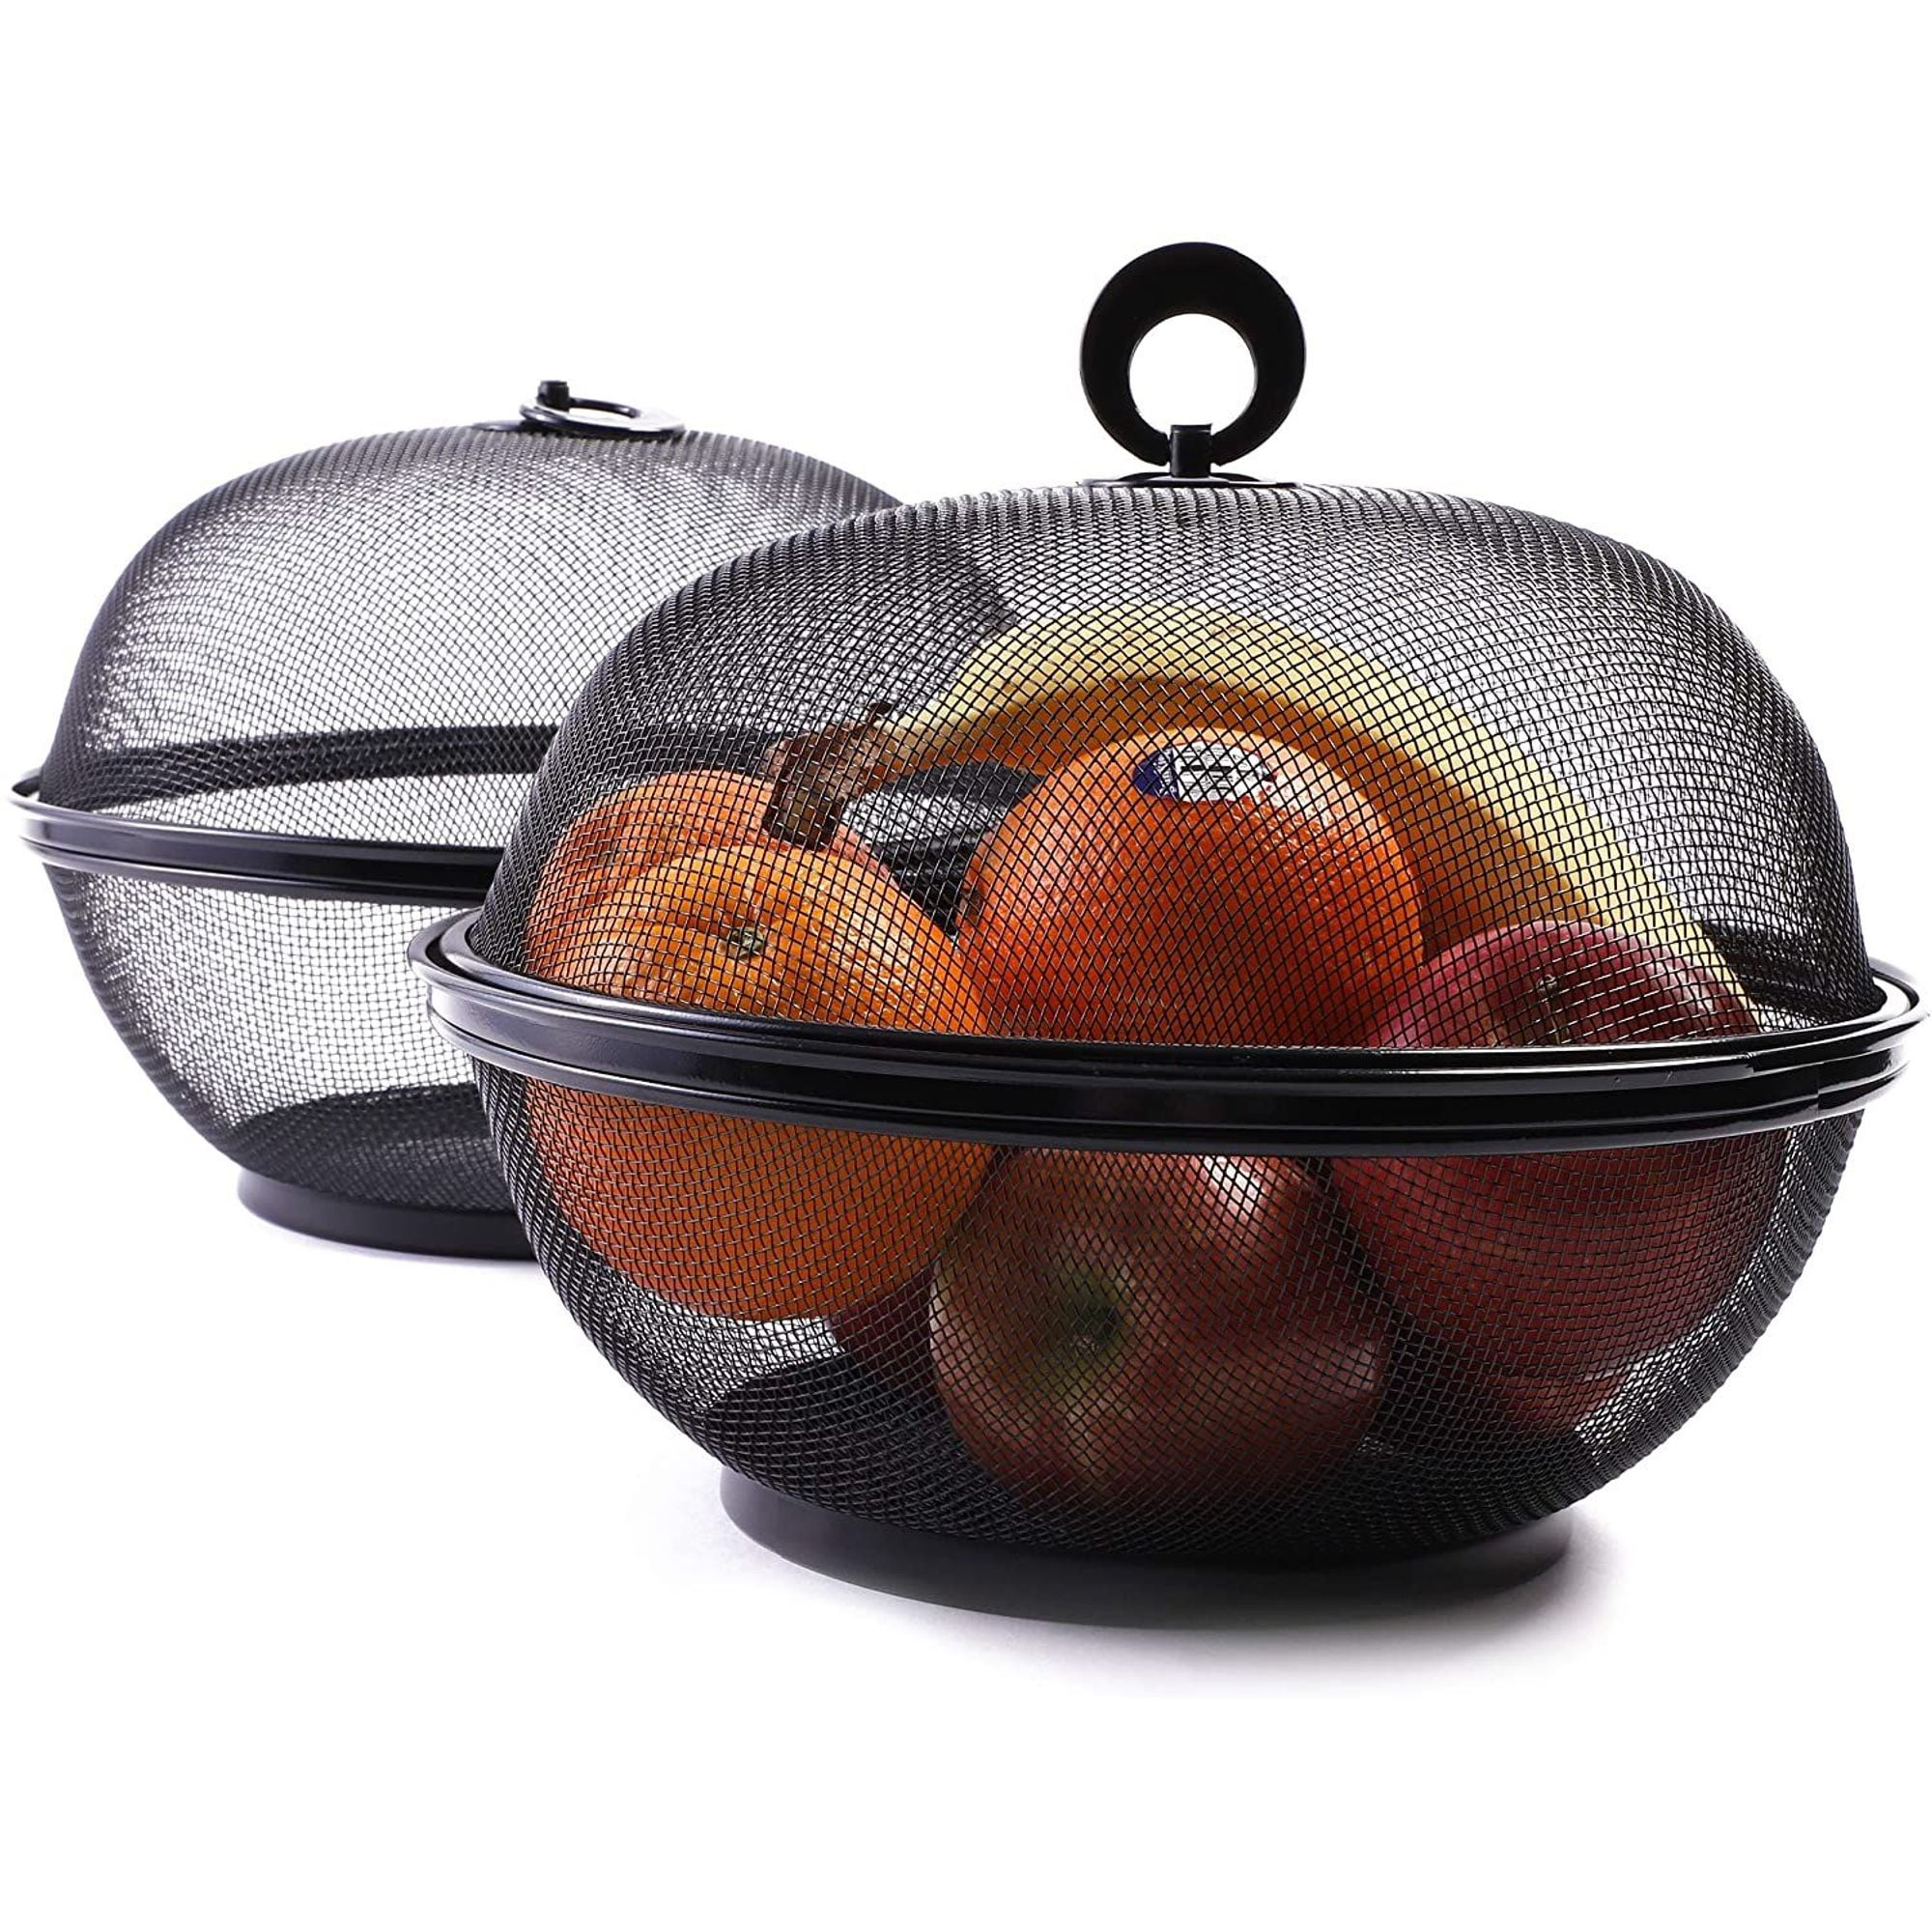 Fruit Bowl Basket Storage Accessories Kitchen Racks Baskets Holders Stands 